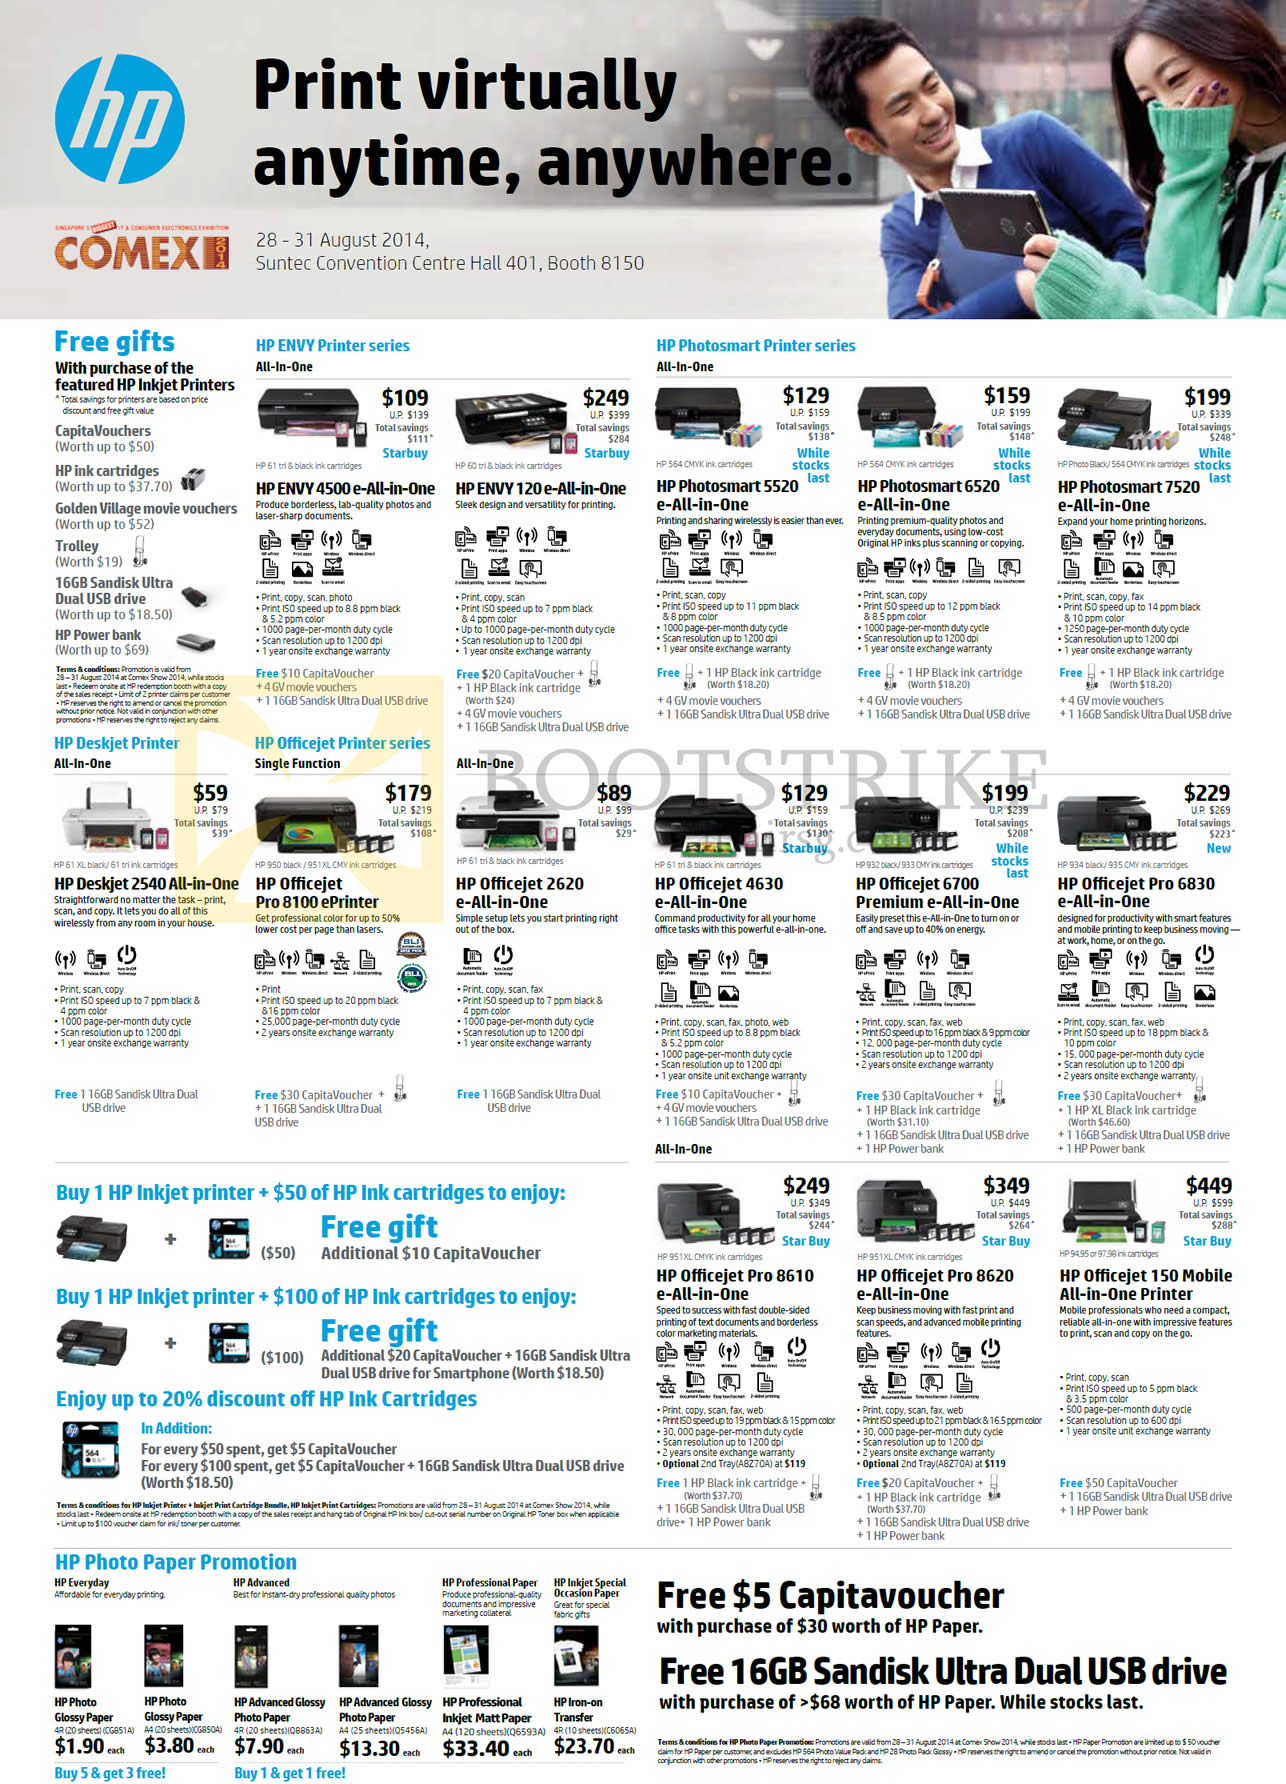 COMEX 2014 price list image brochure of HP Printers Envy 4500, 120, Photosmart 5520, 6520, 7520, Deskjet 2540, Officejet Pro 8100, 2620, 4630, 6700, 6830, 8610, 8620, 150